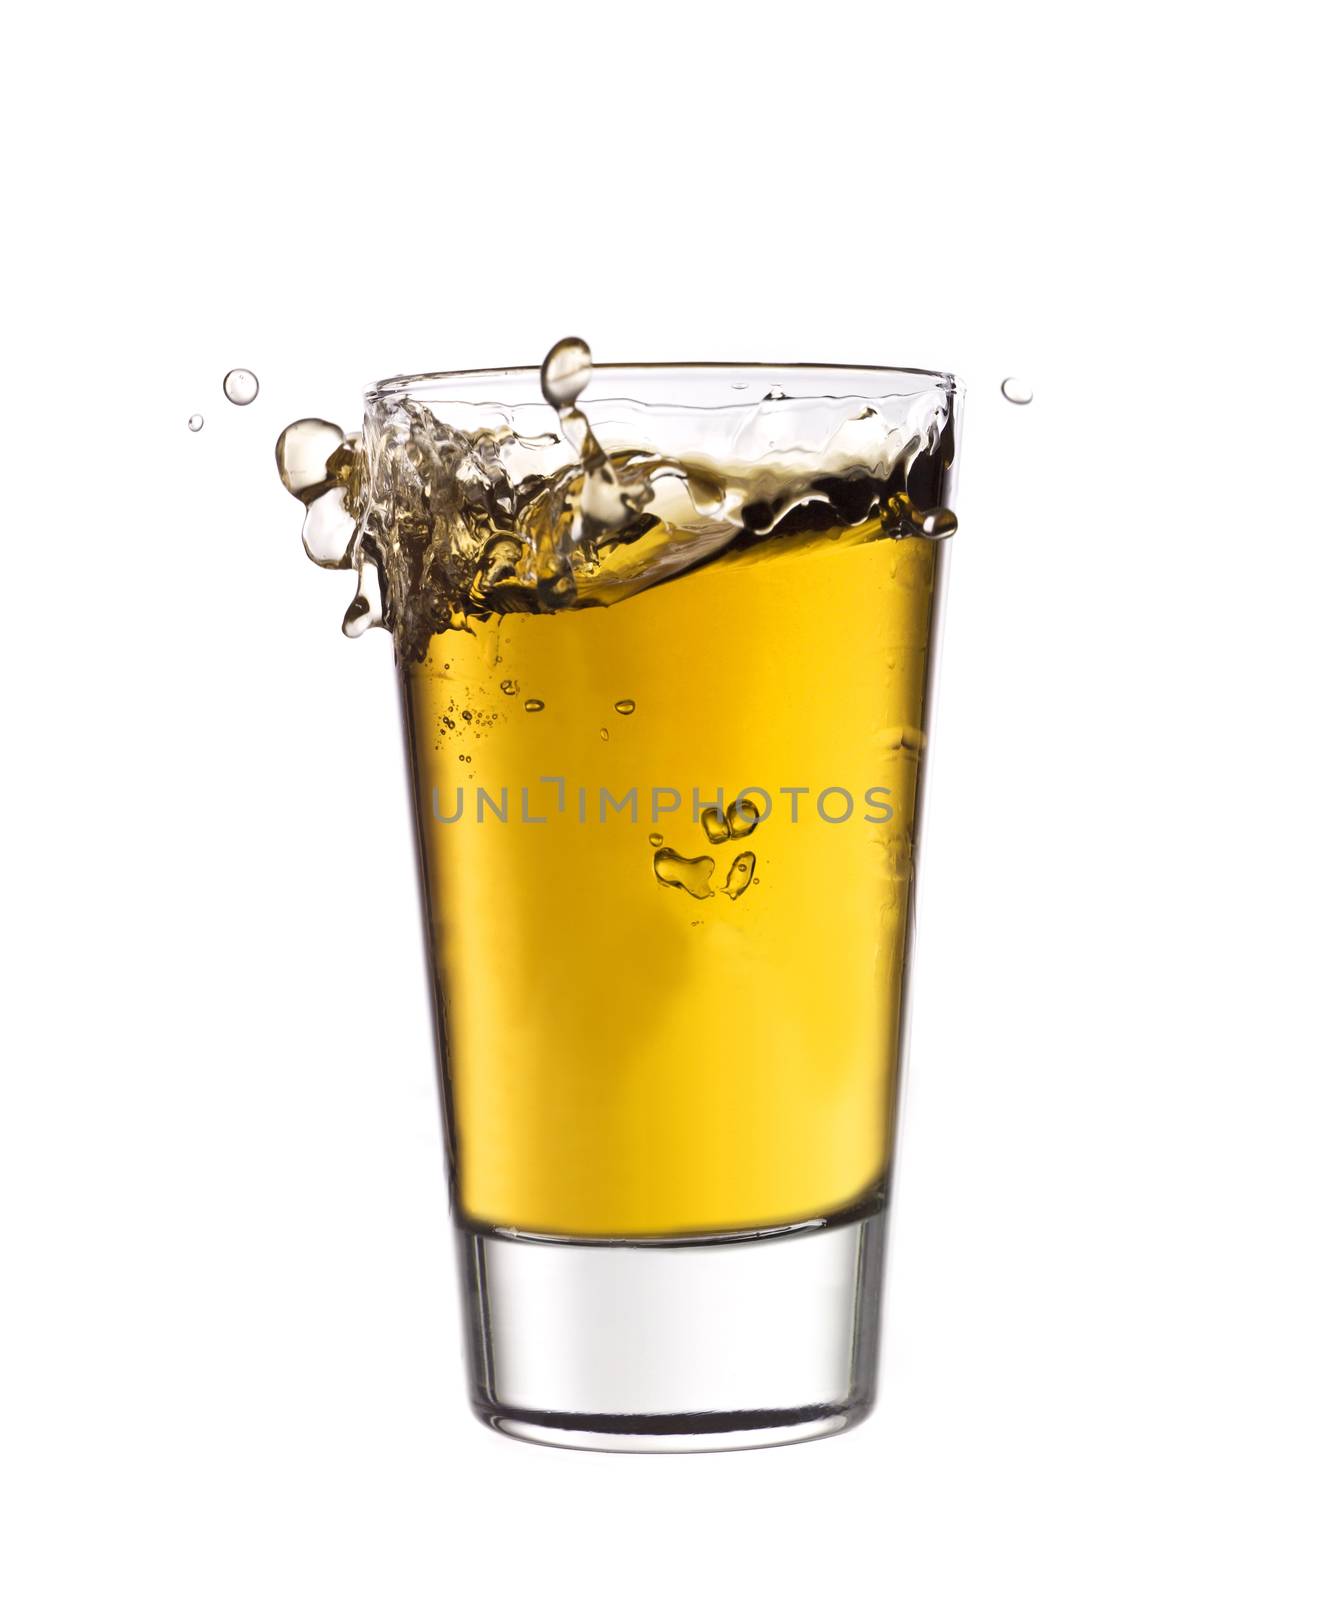 Splash in a glass of Yellow lemonade by gemenacom